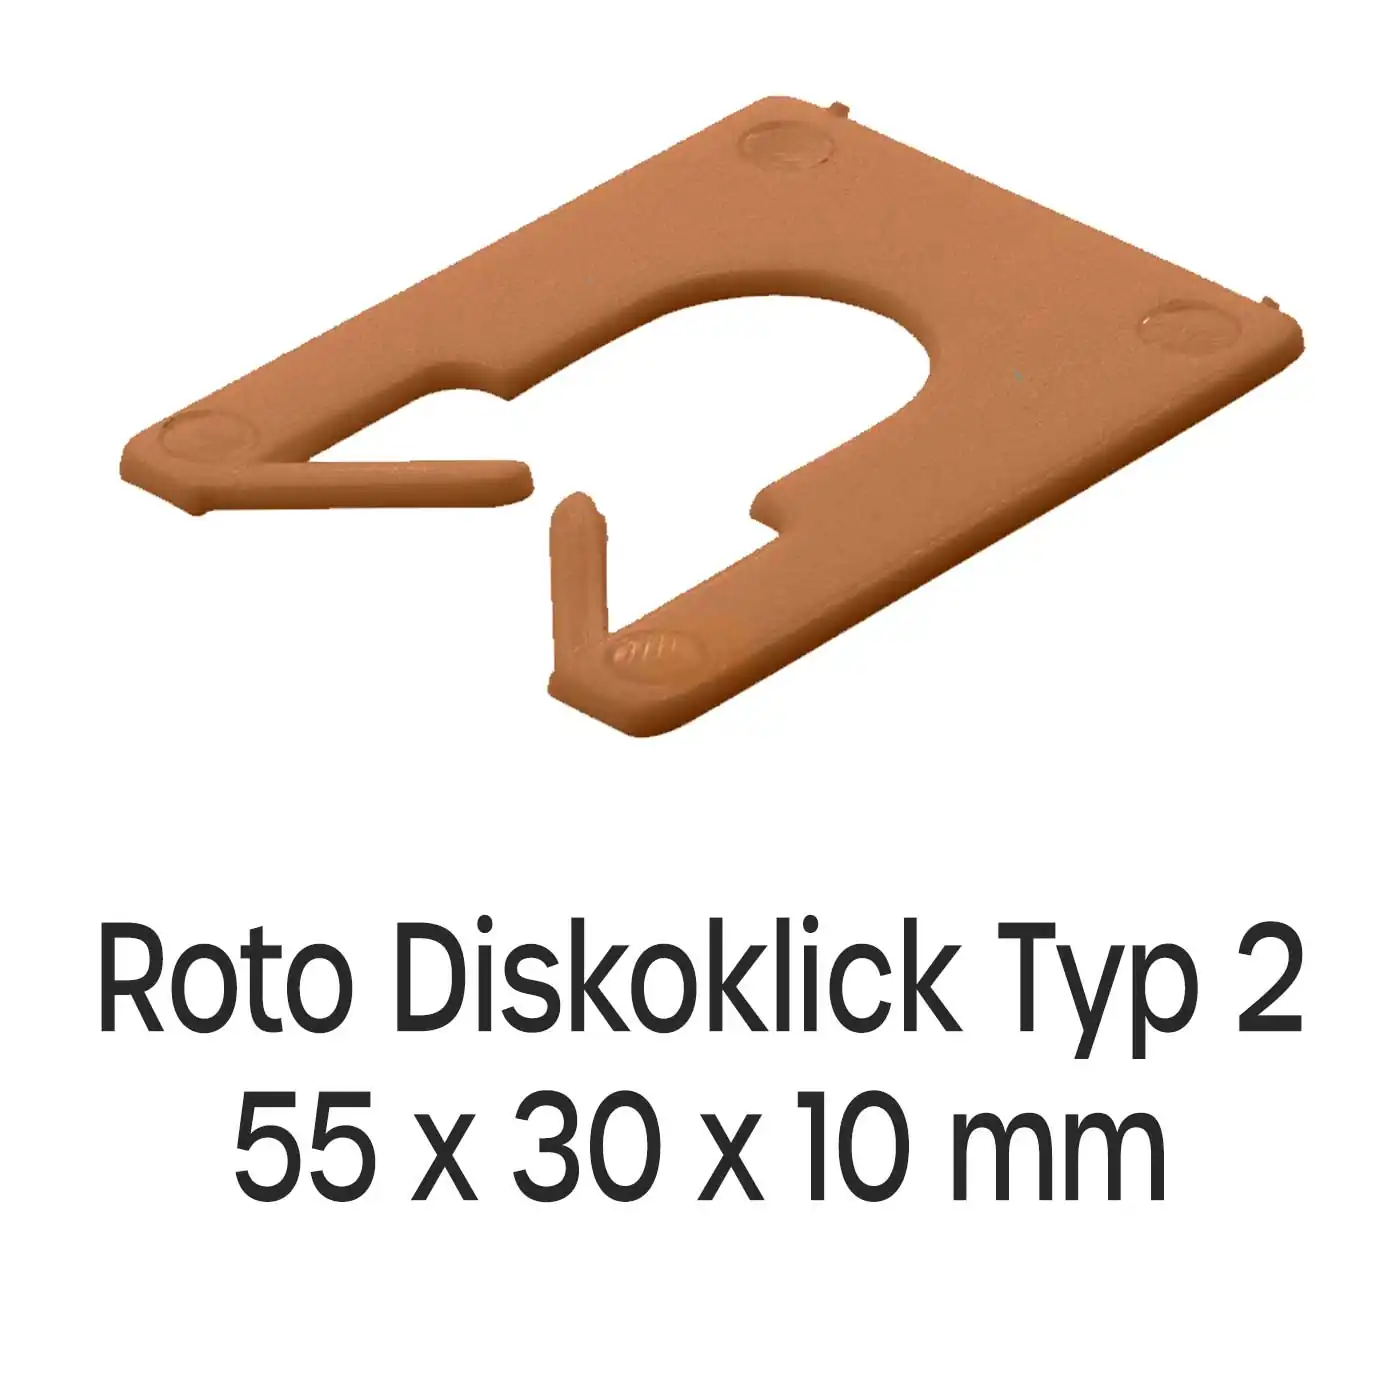 Distanzplatten Roto Diskoklick Typ 2 55 x 30 x 10 mm 500 Stück